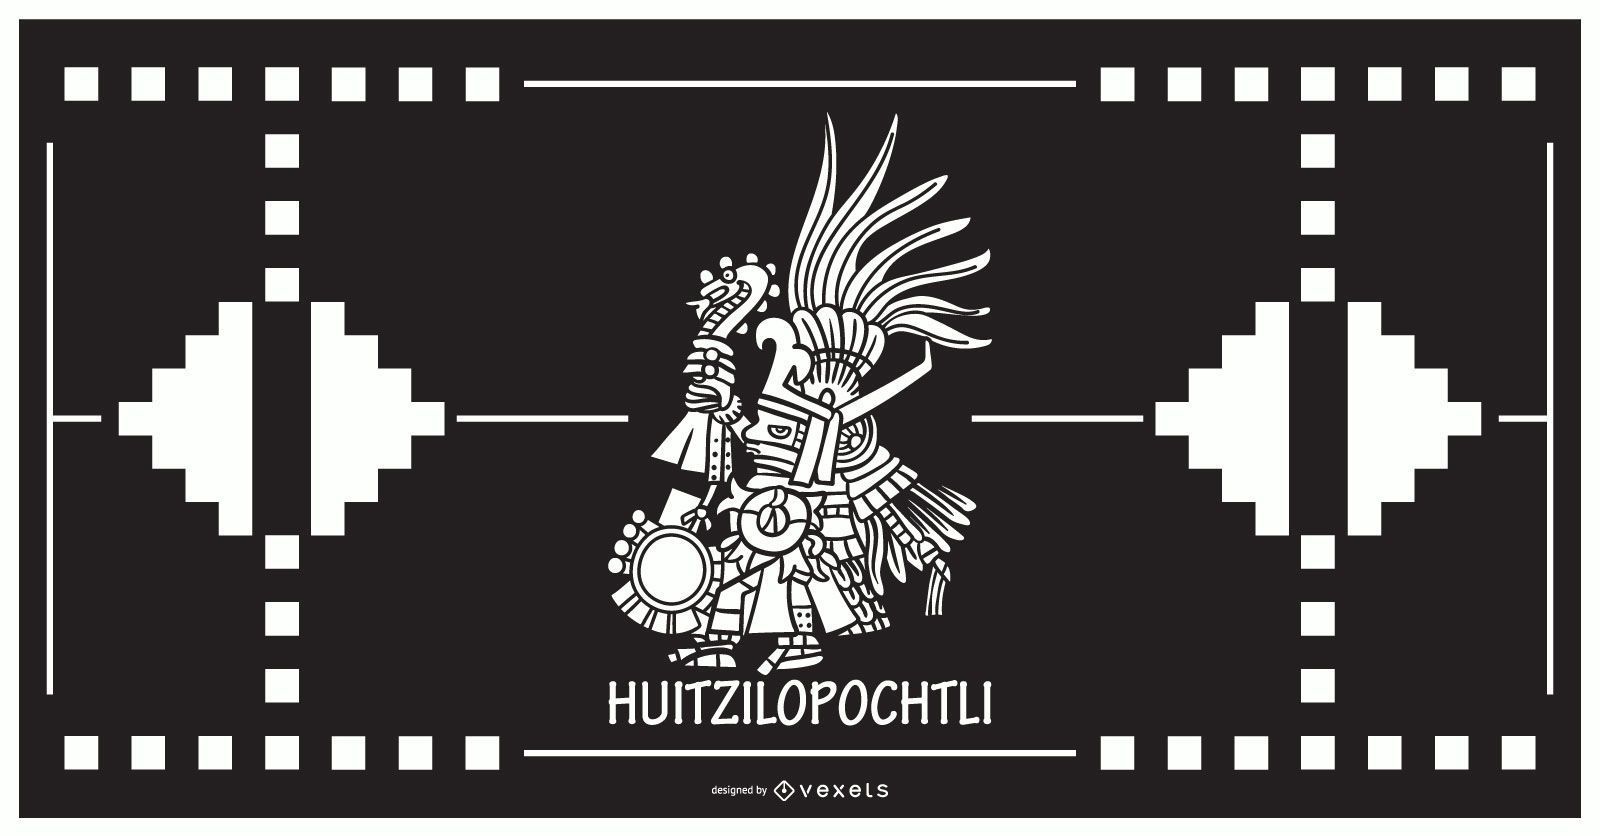 Huitzilopochtli aztec god design